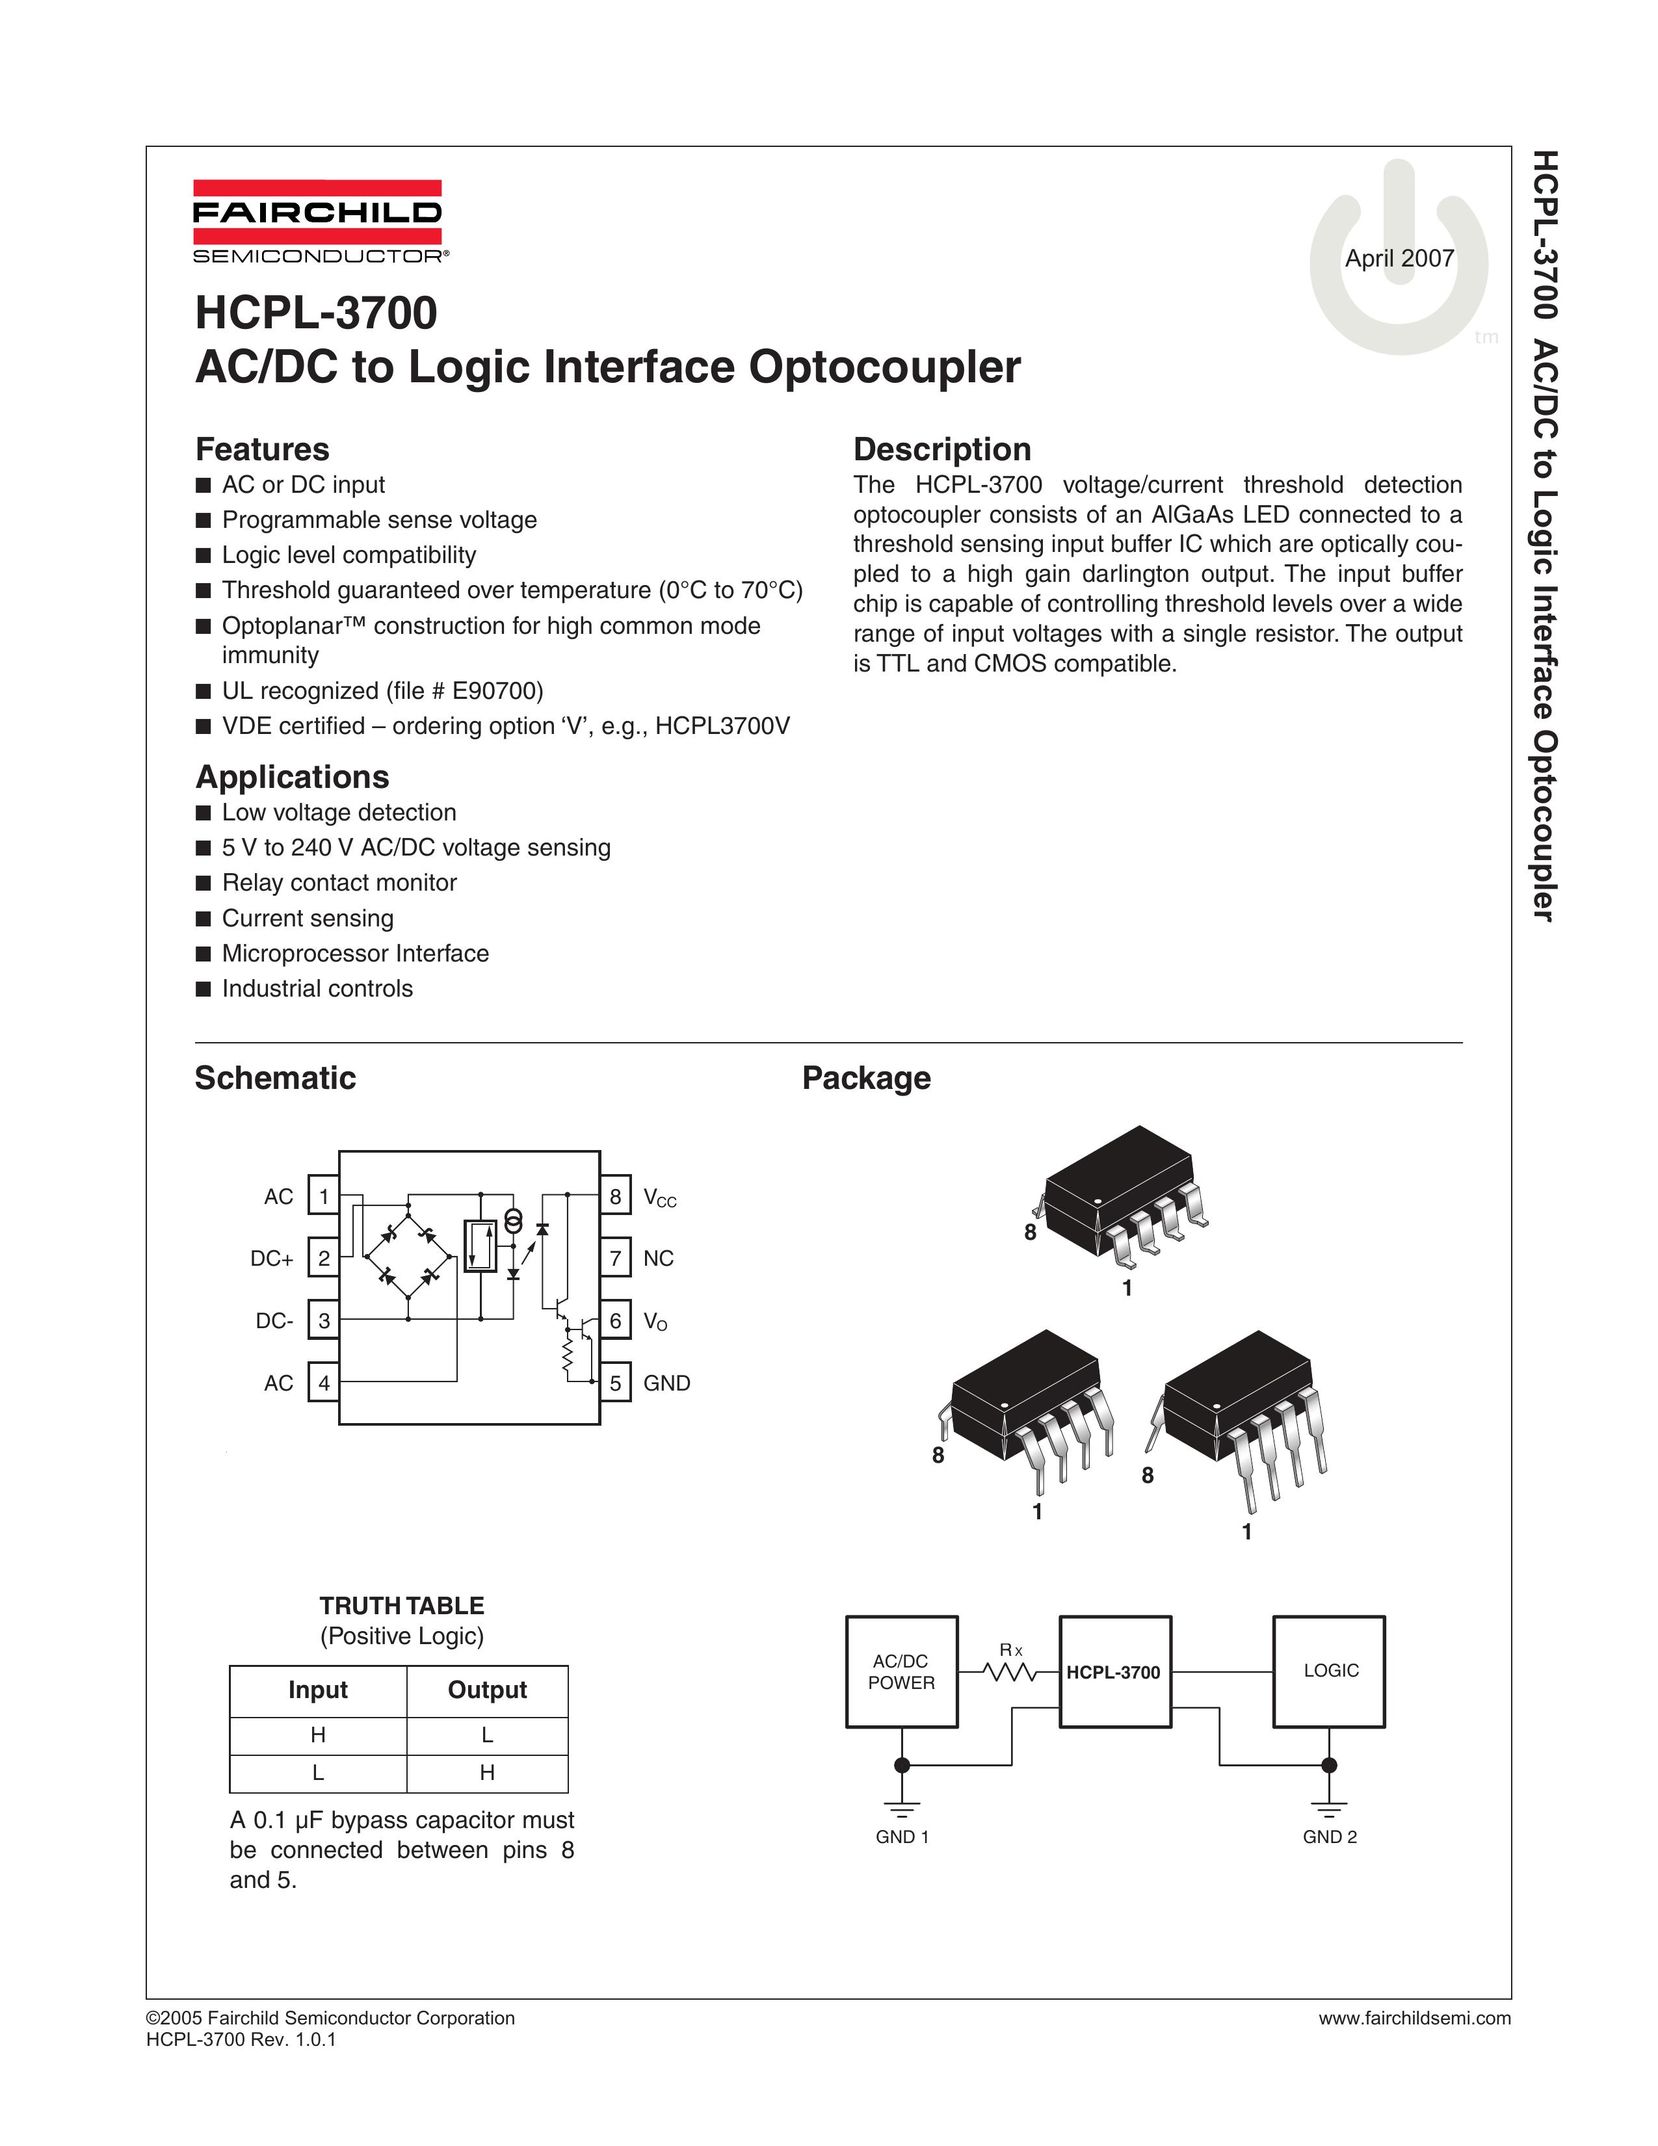 Fairchild HCPL-3700 Network Card User Manual